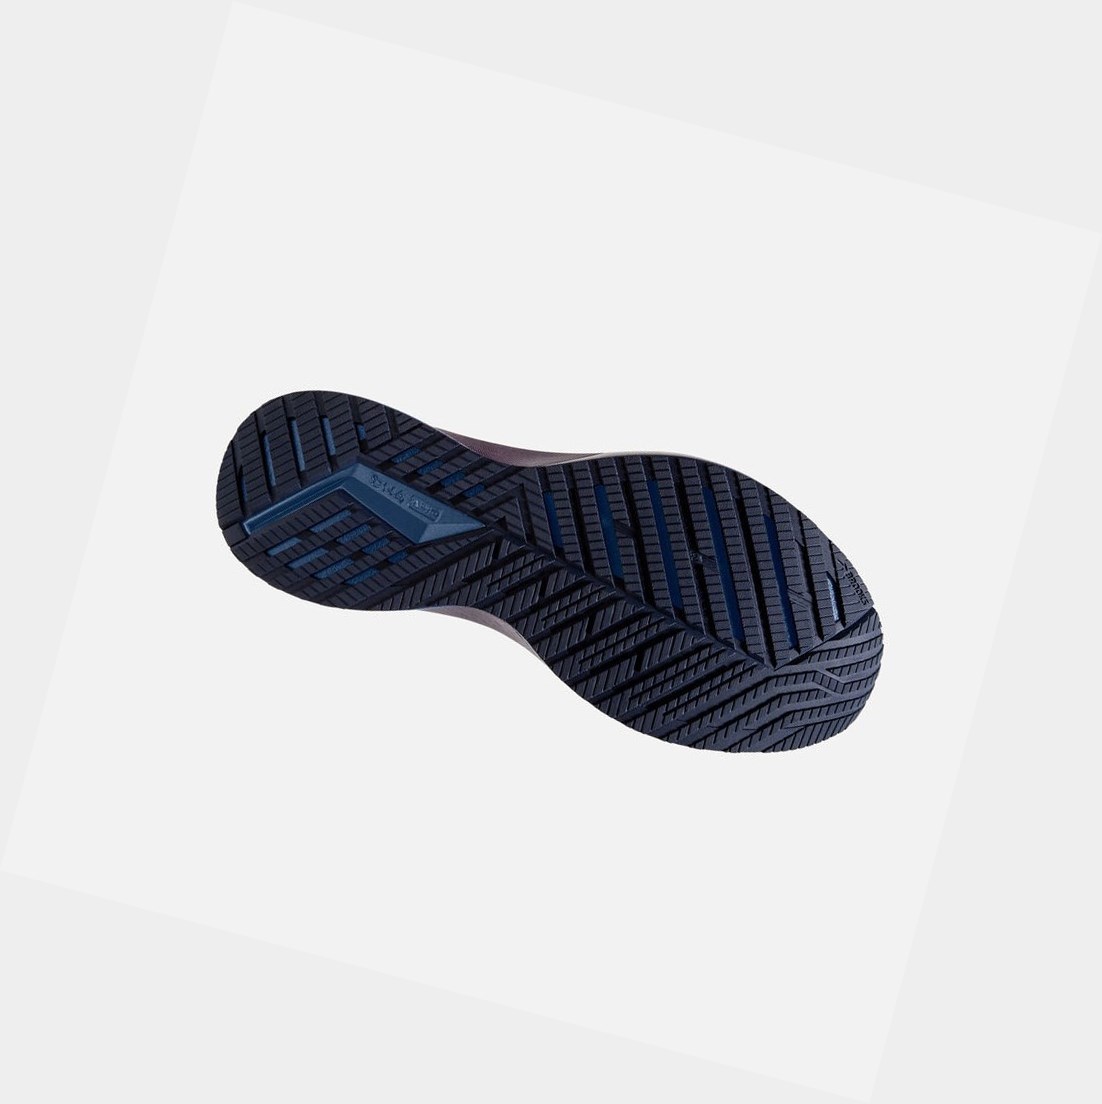 Brooks Levitate 4 Men's Road Running Shoes Grey / Oyster / Blue | BRIK-12679